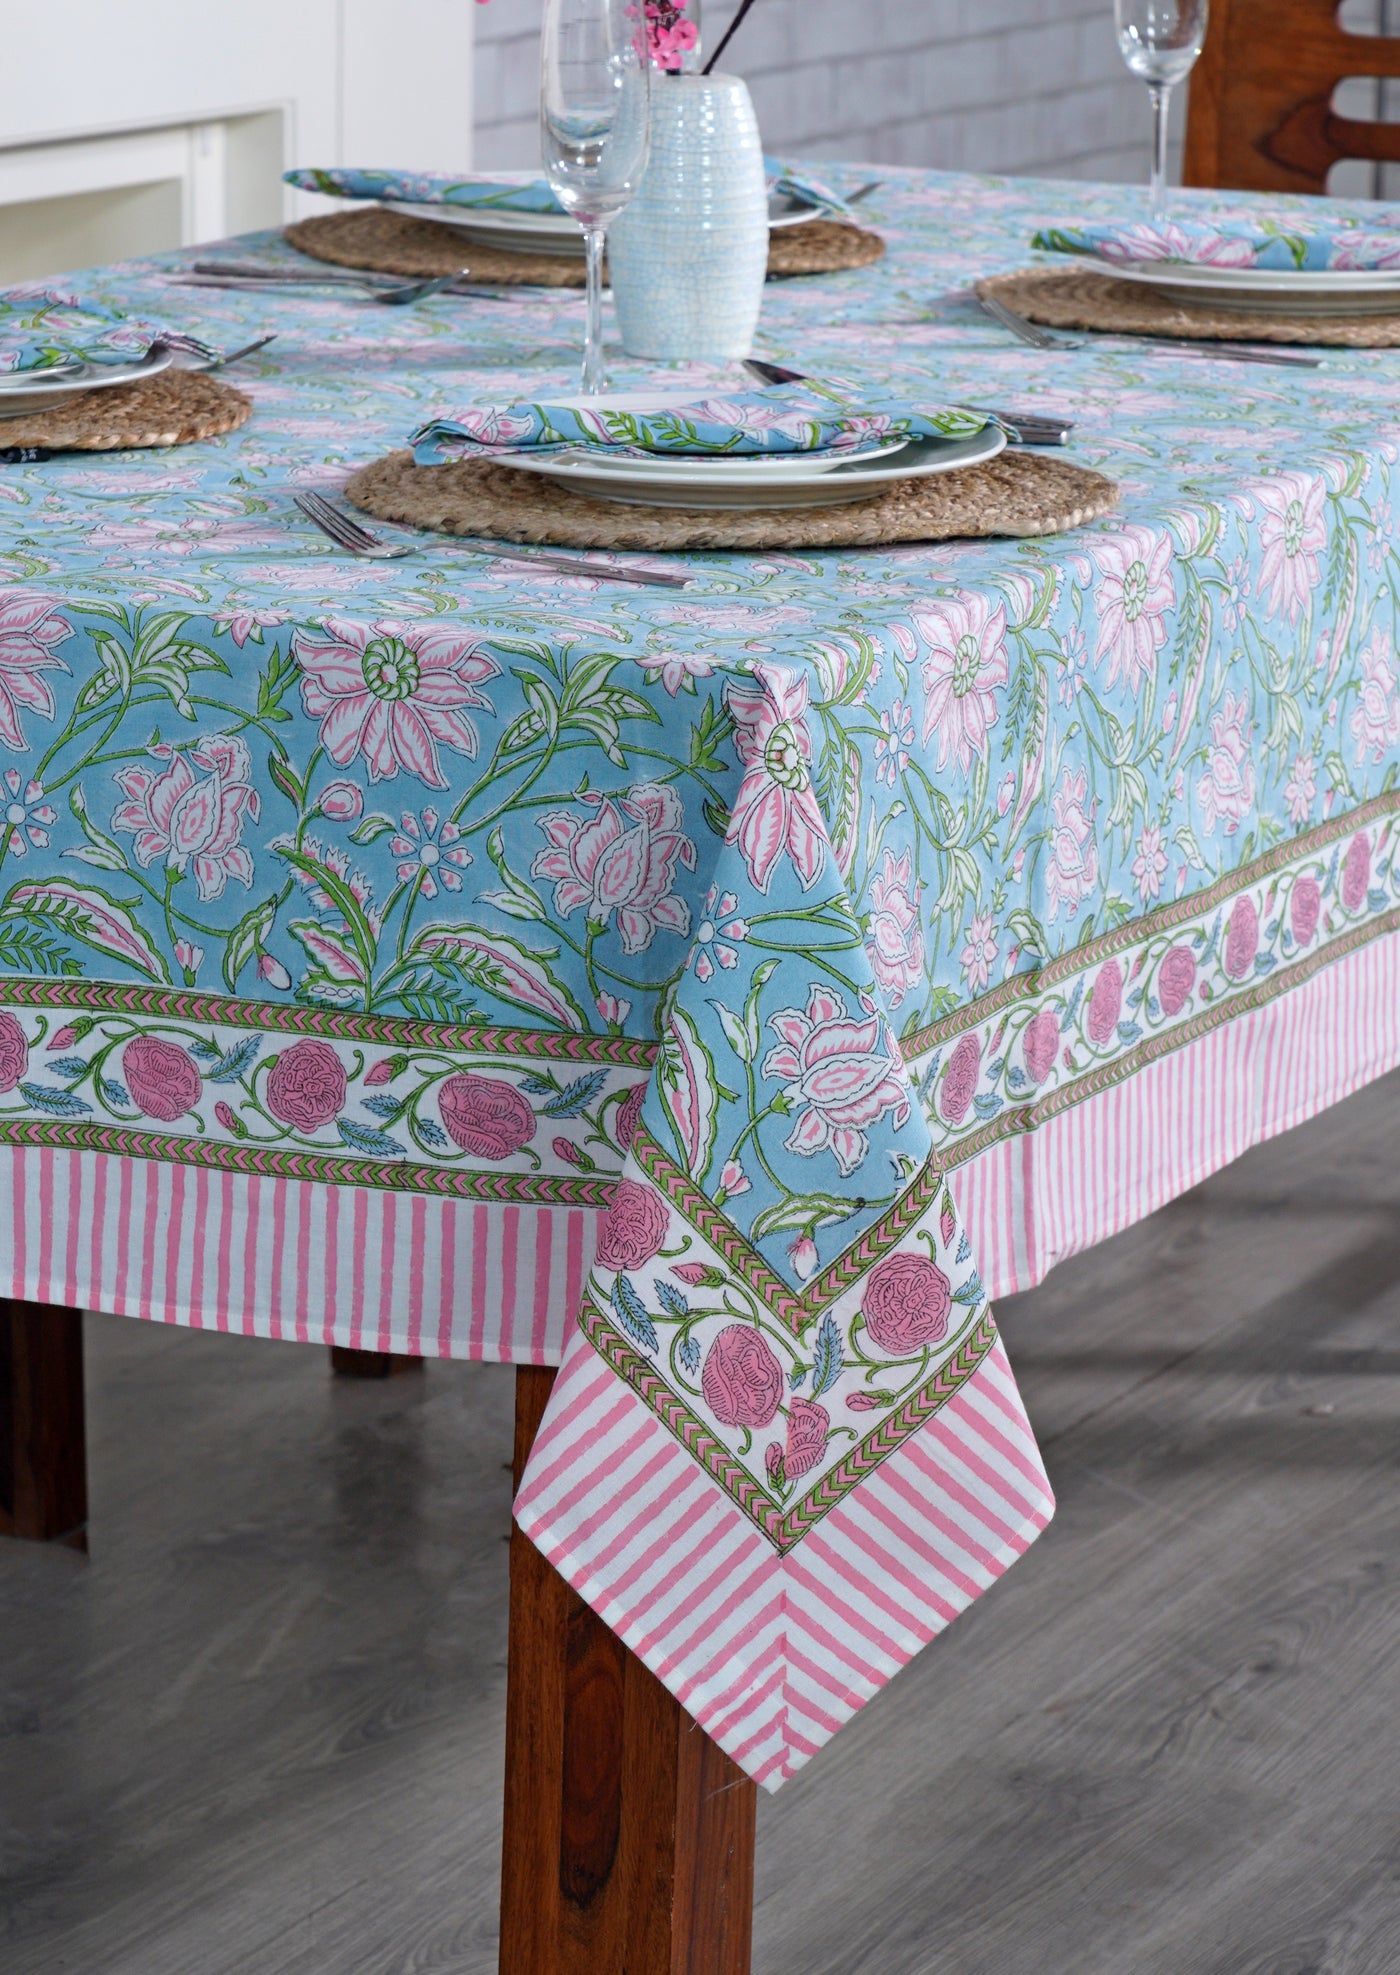 fabricrush Ice Blue, Kelly Green, Flamingo Pink Indian Hand Block Printed Tablecloth Table Cover Linen Set, Housewarming Gift, Farmhouse Wedding Decor